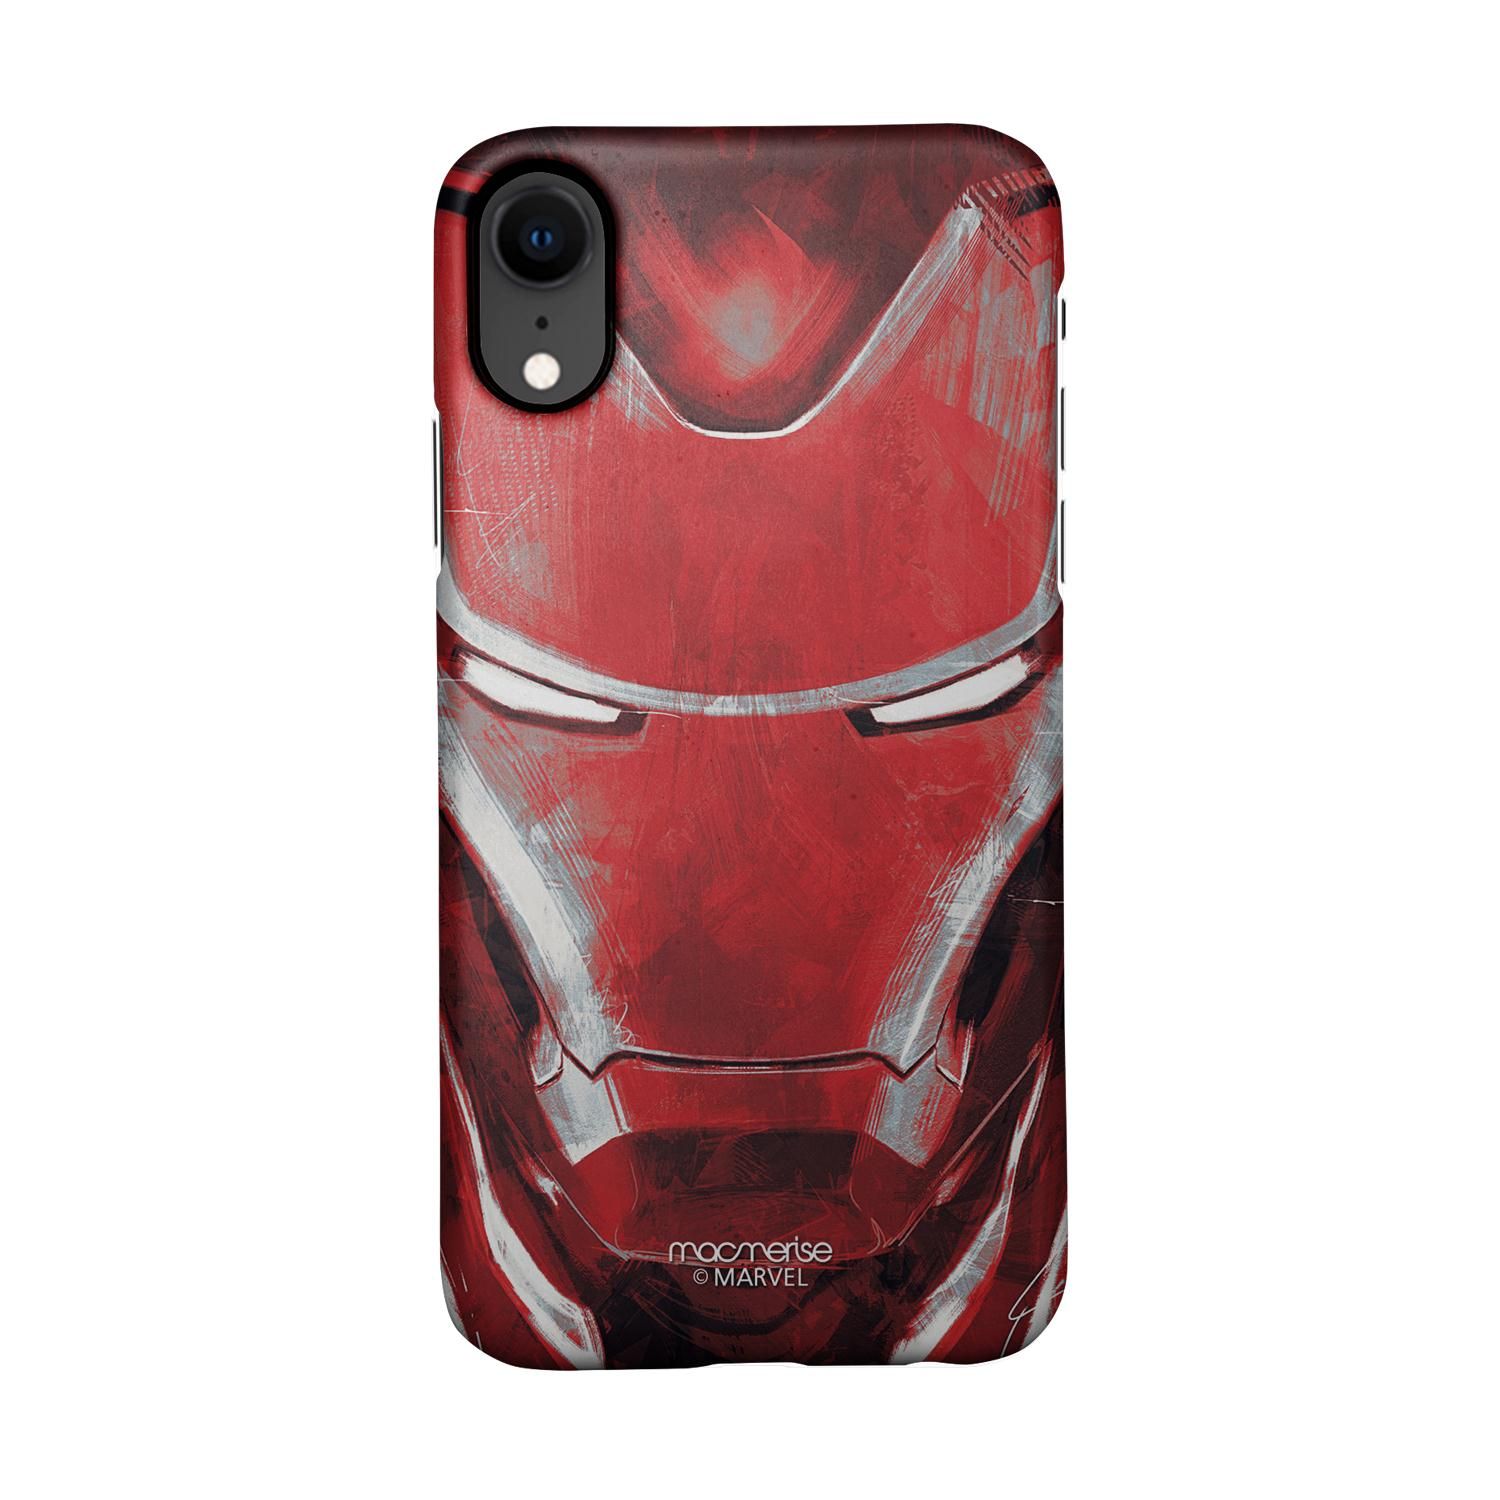 Buy Charcoal Art Iron man - Sleek Phone Case for iPhone XR Online